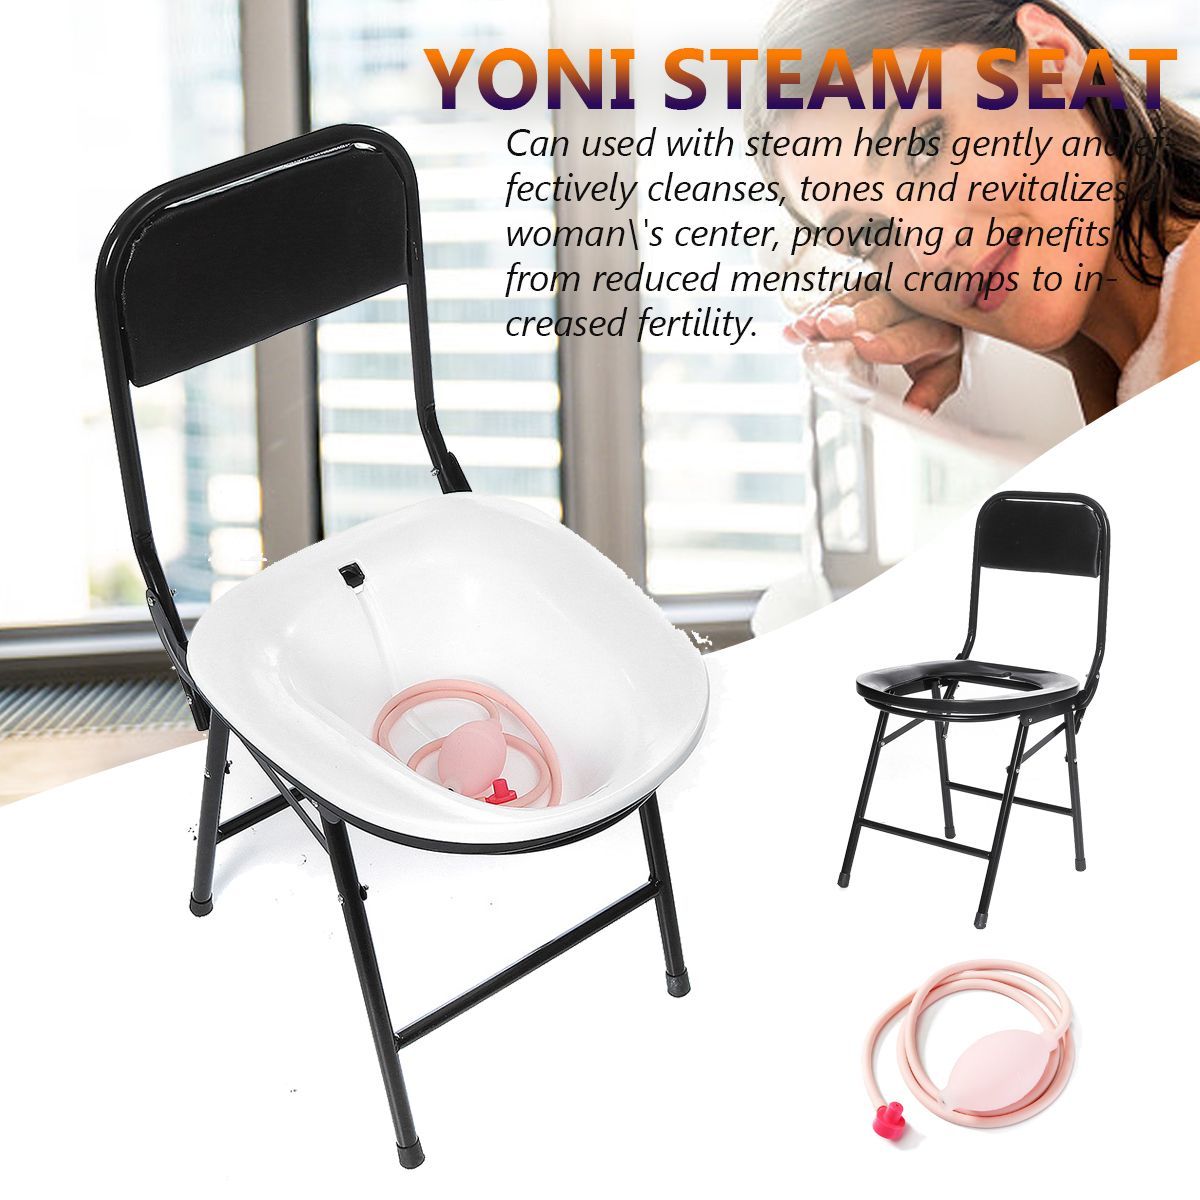 Yoni-Steam-Seat-Stool-Vagina-Herbal-Sitz-Bath-Bowl-Female-Bidet-Toilet-Chair-1670508